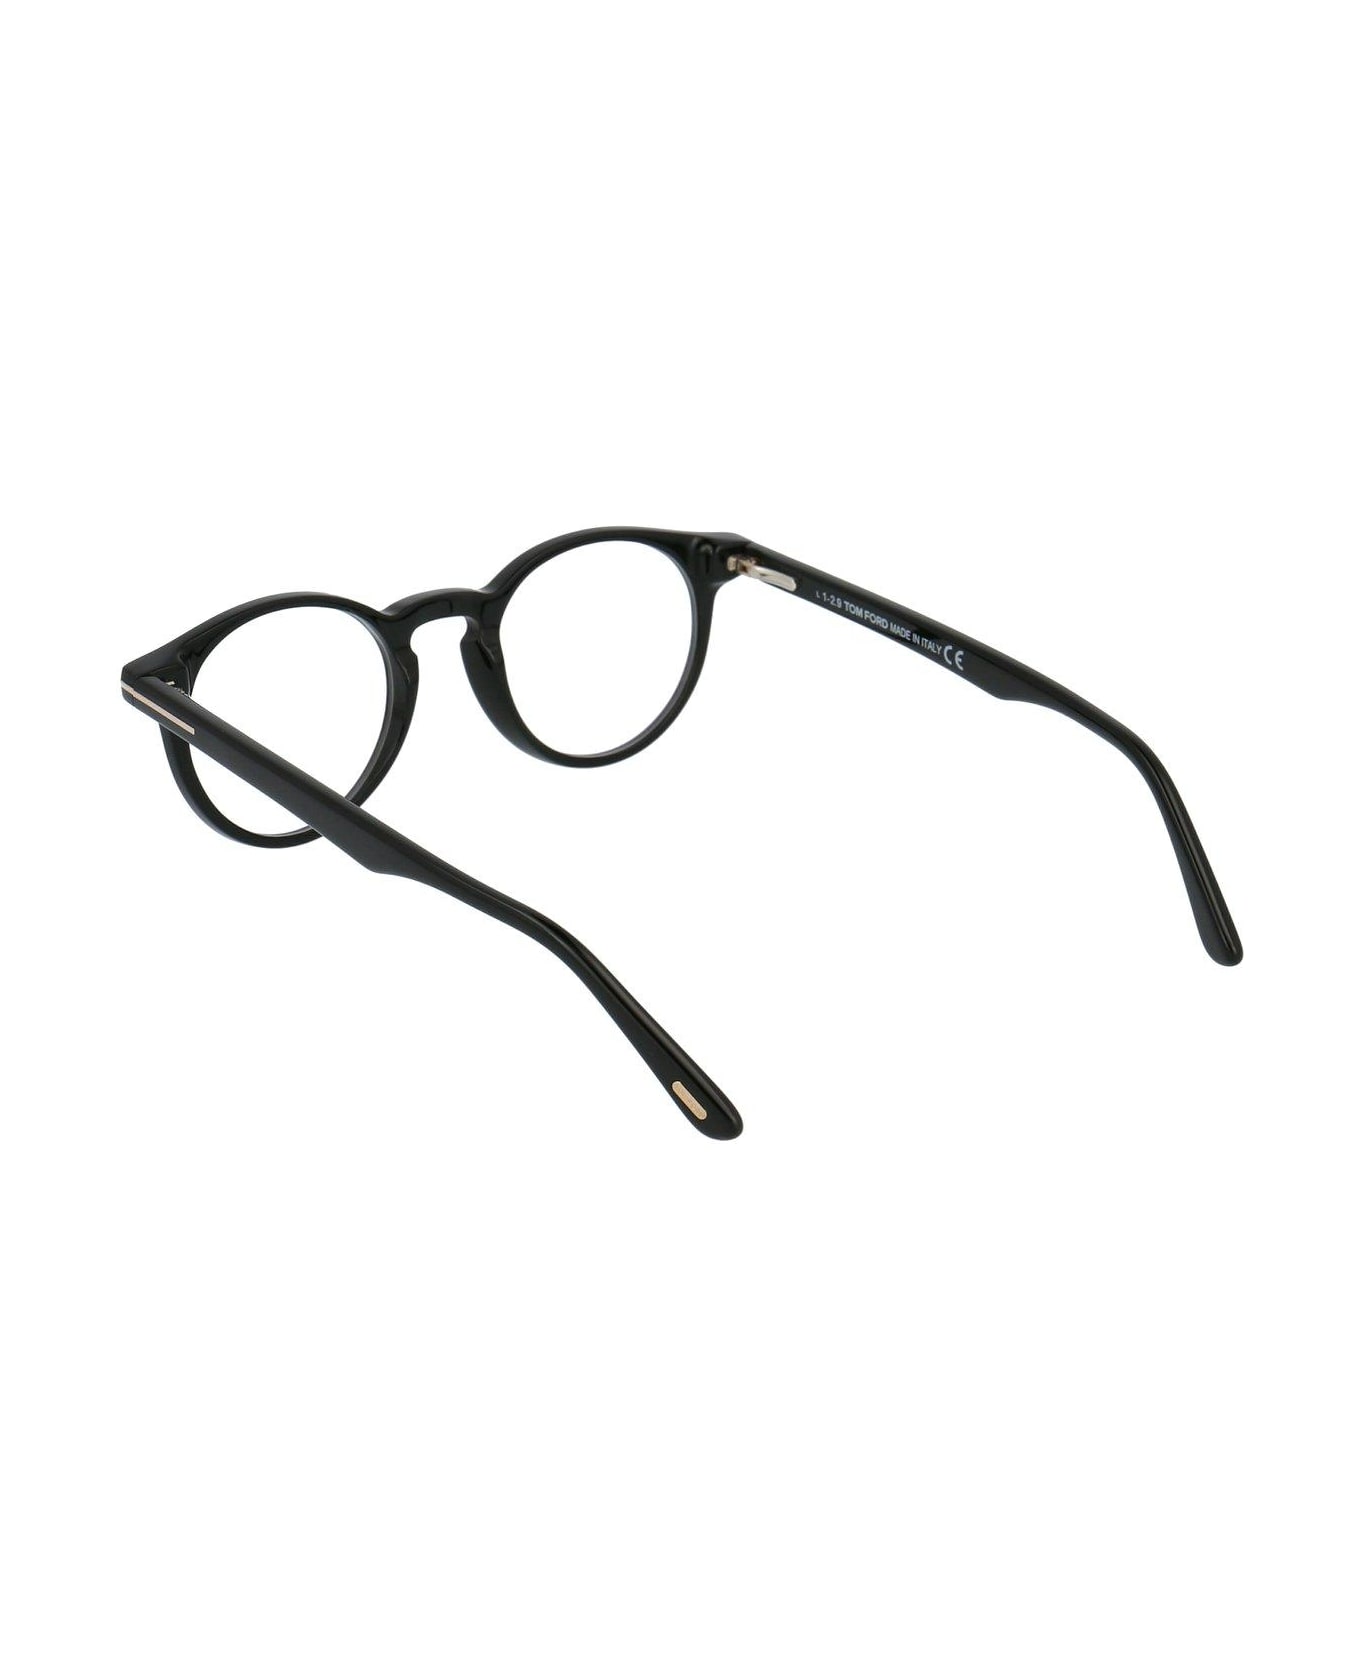 Tom Ford Eyewear Round Frame Glasses Glasses - 001 Nero Lucido